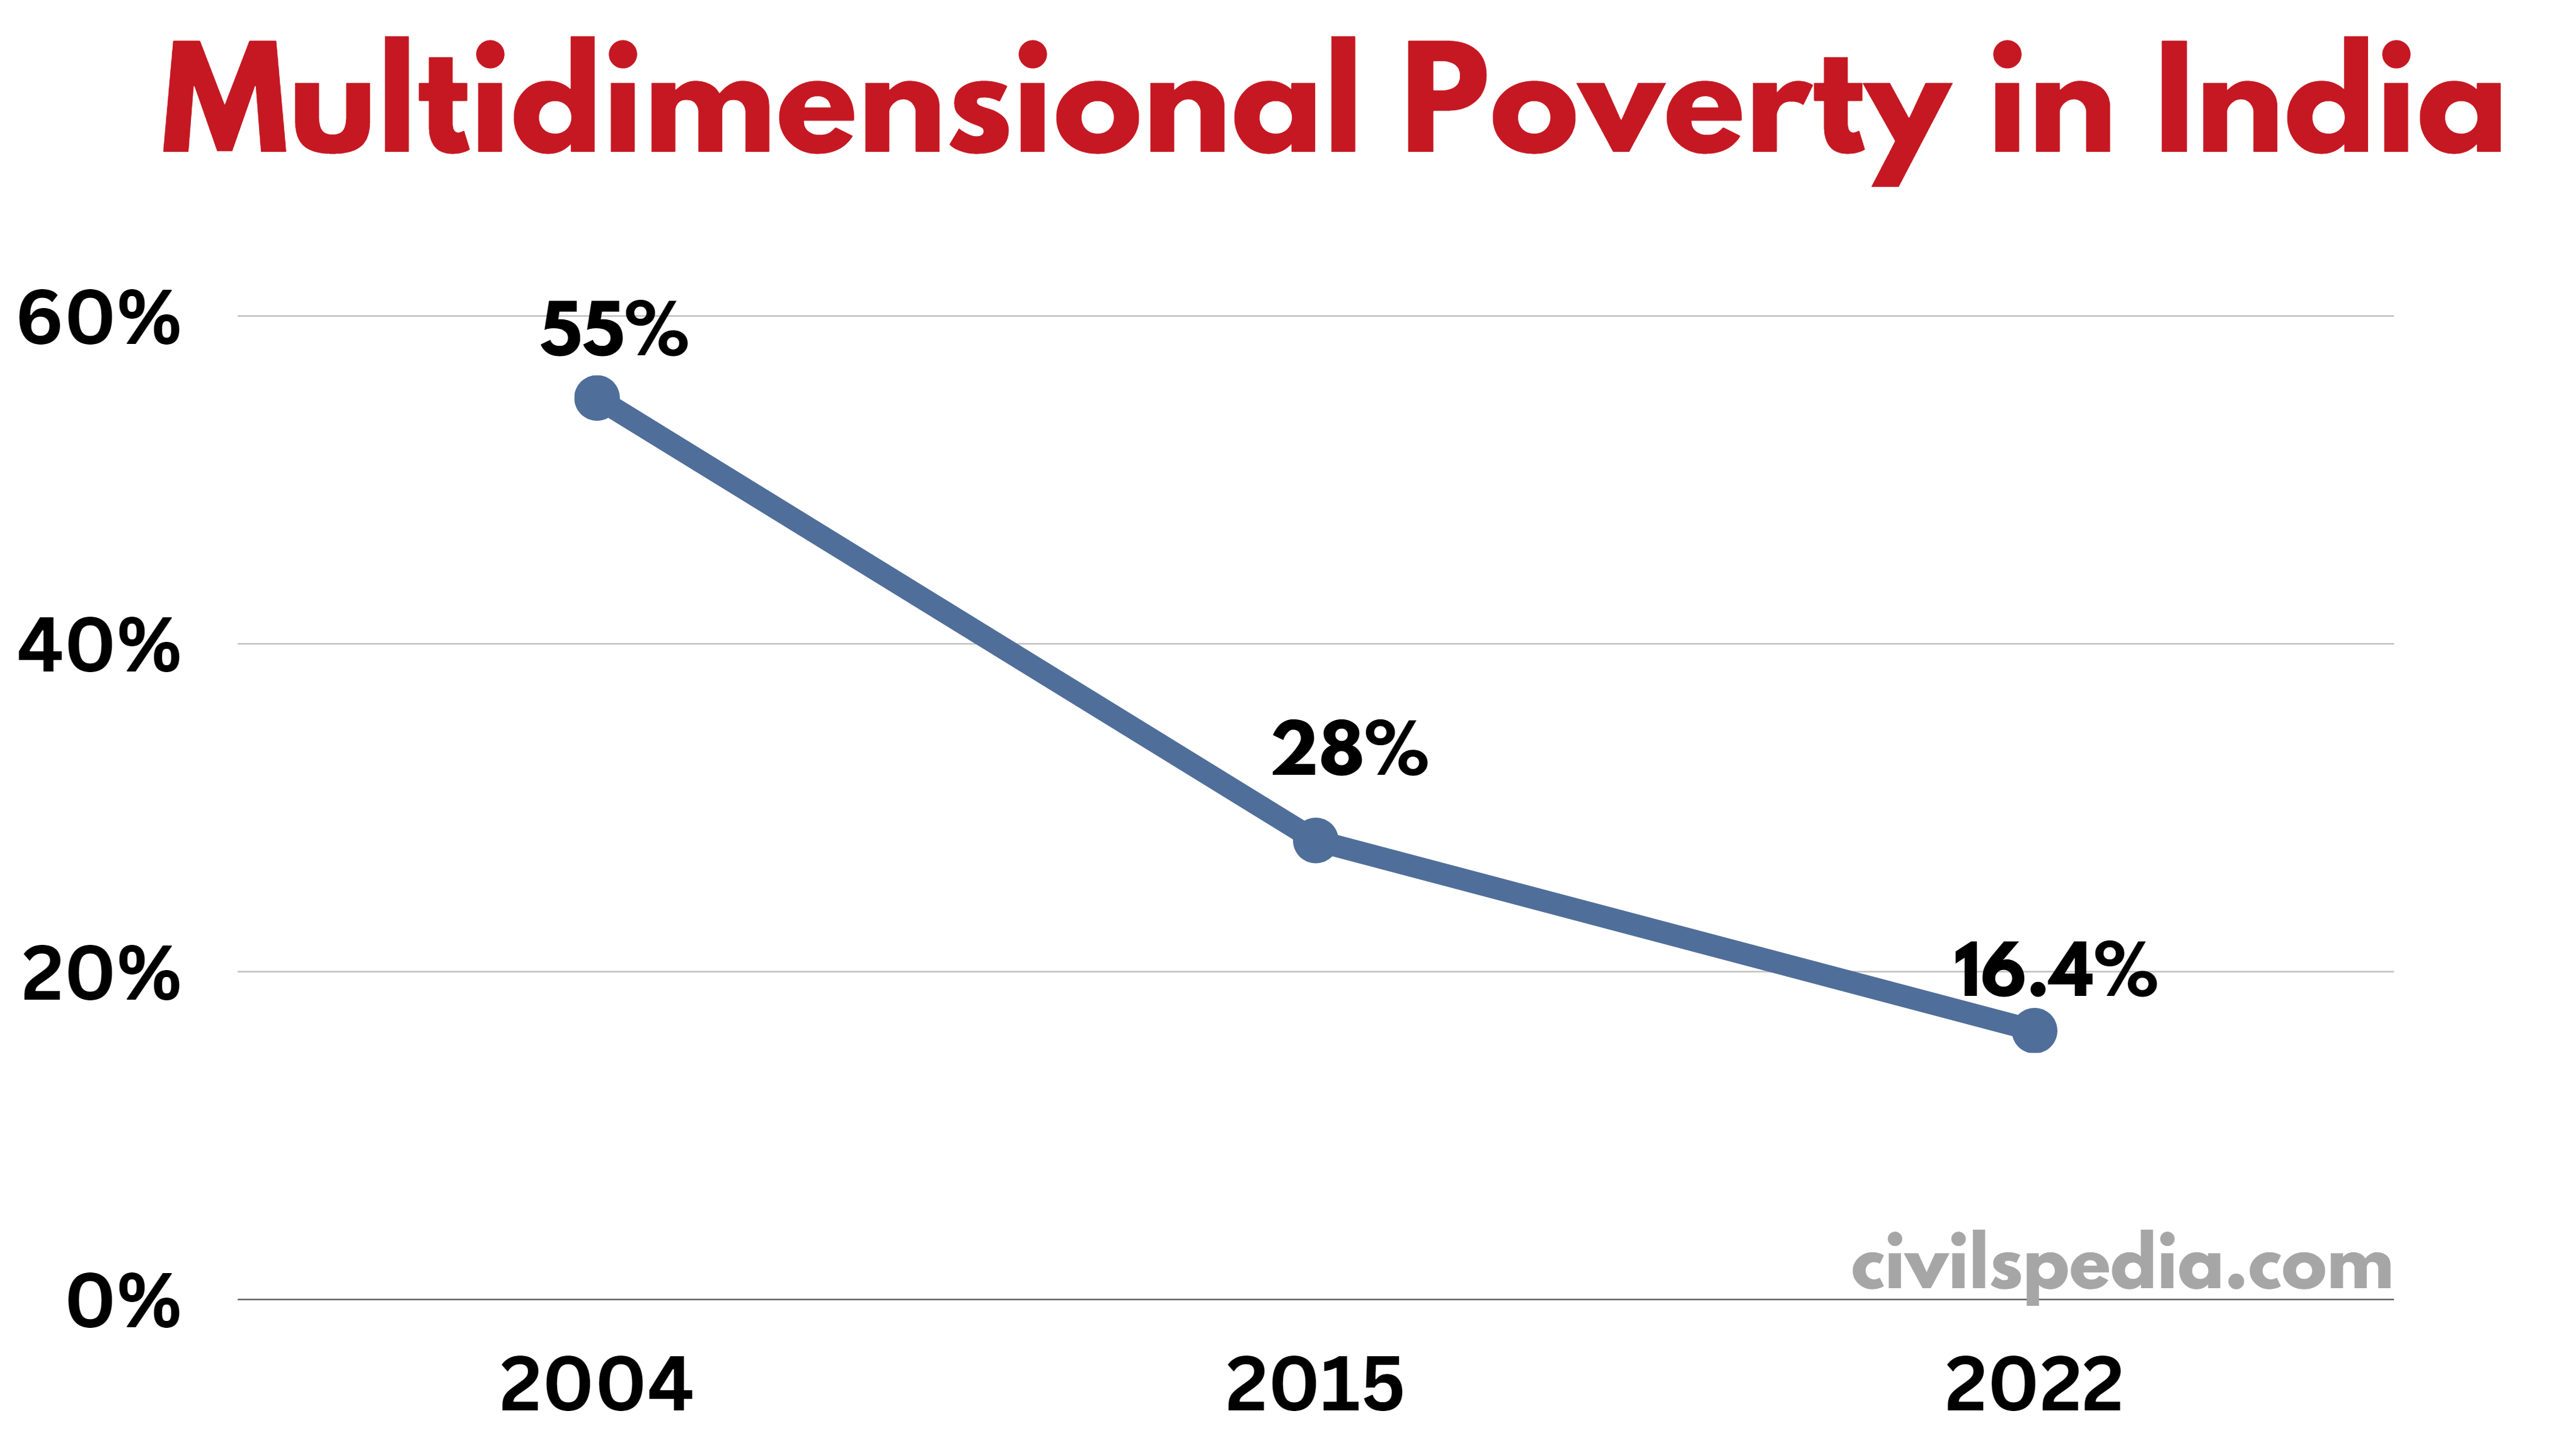 Multidimensional Poverty  in India - Trend